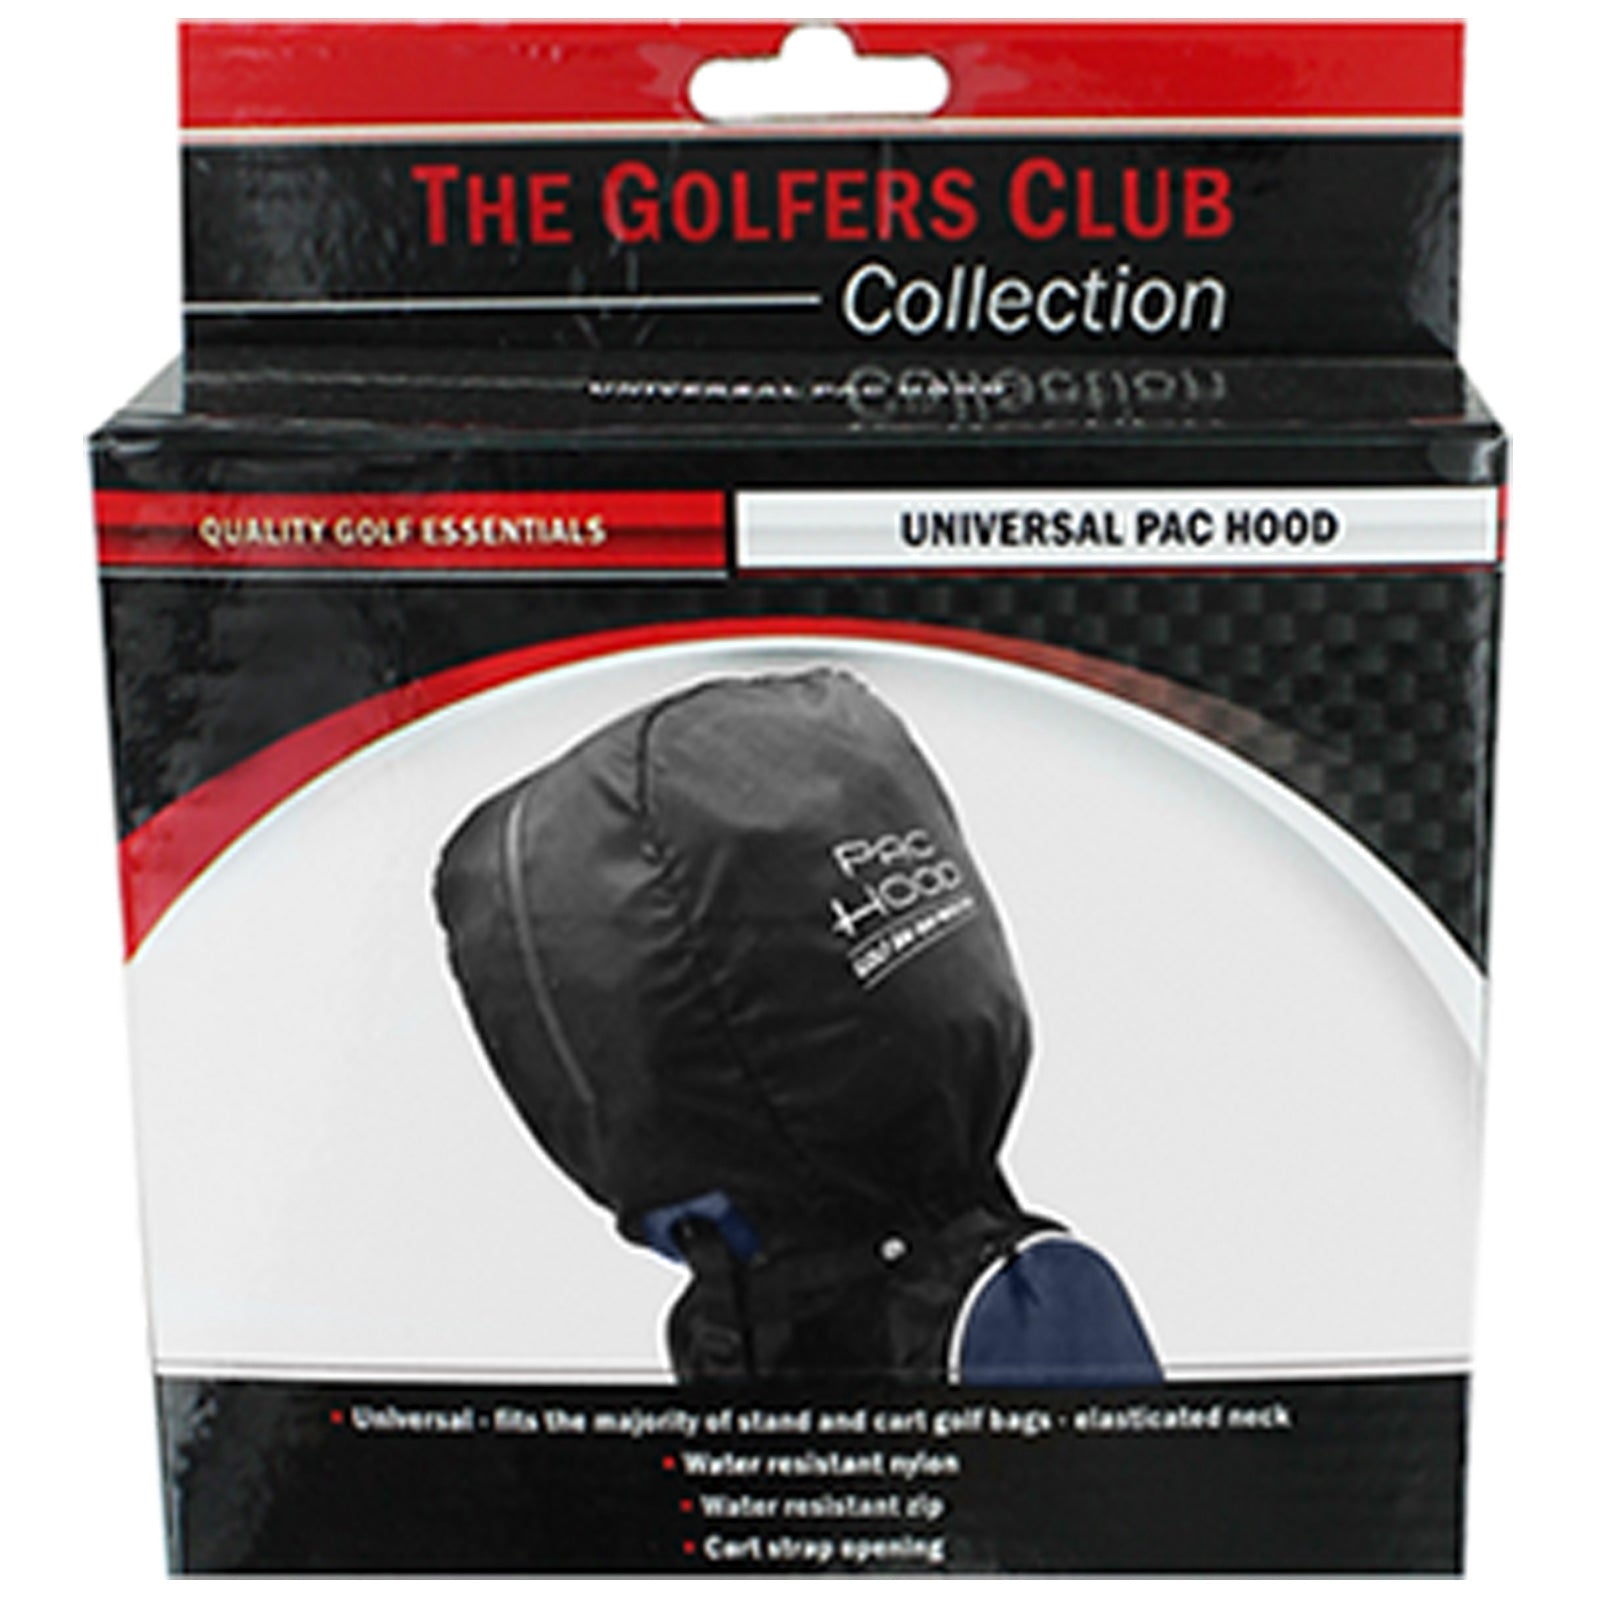 Golfers Club Collection Pac Hood